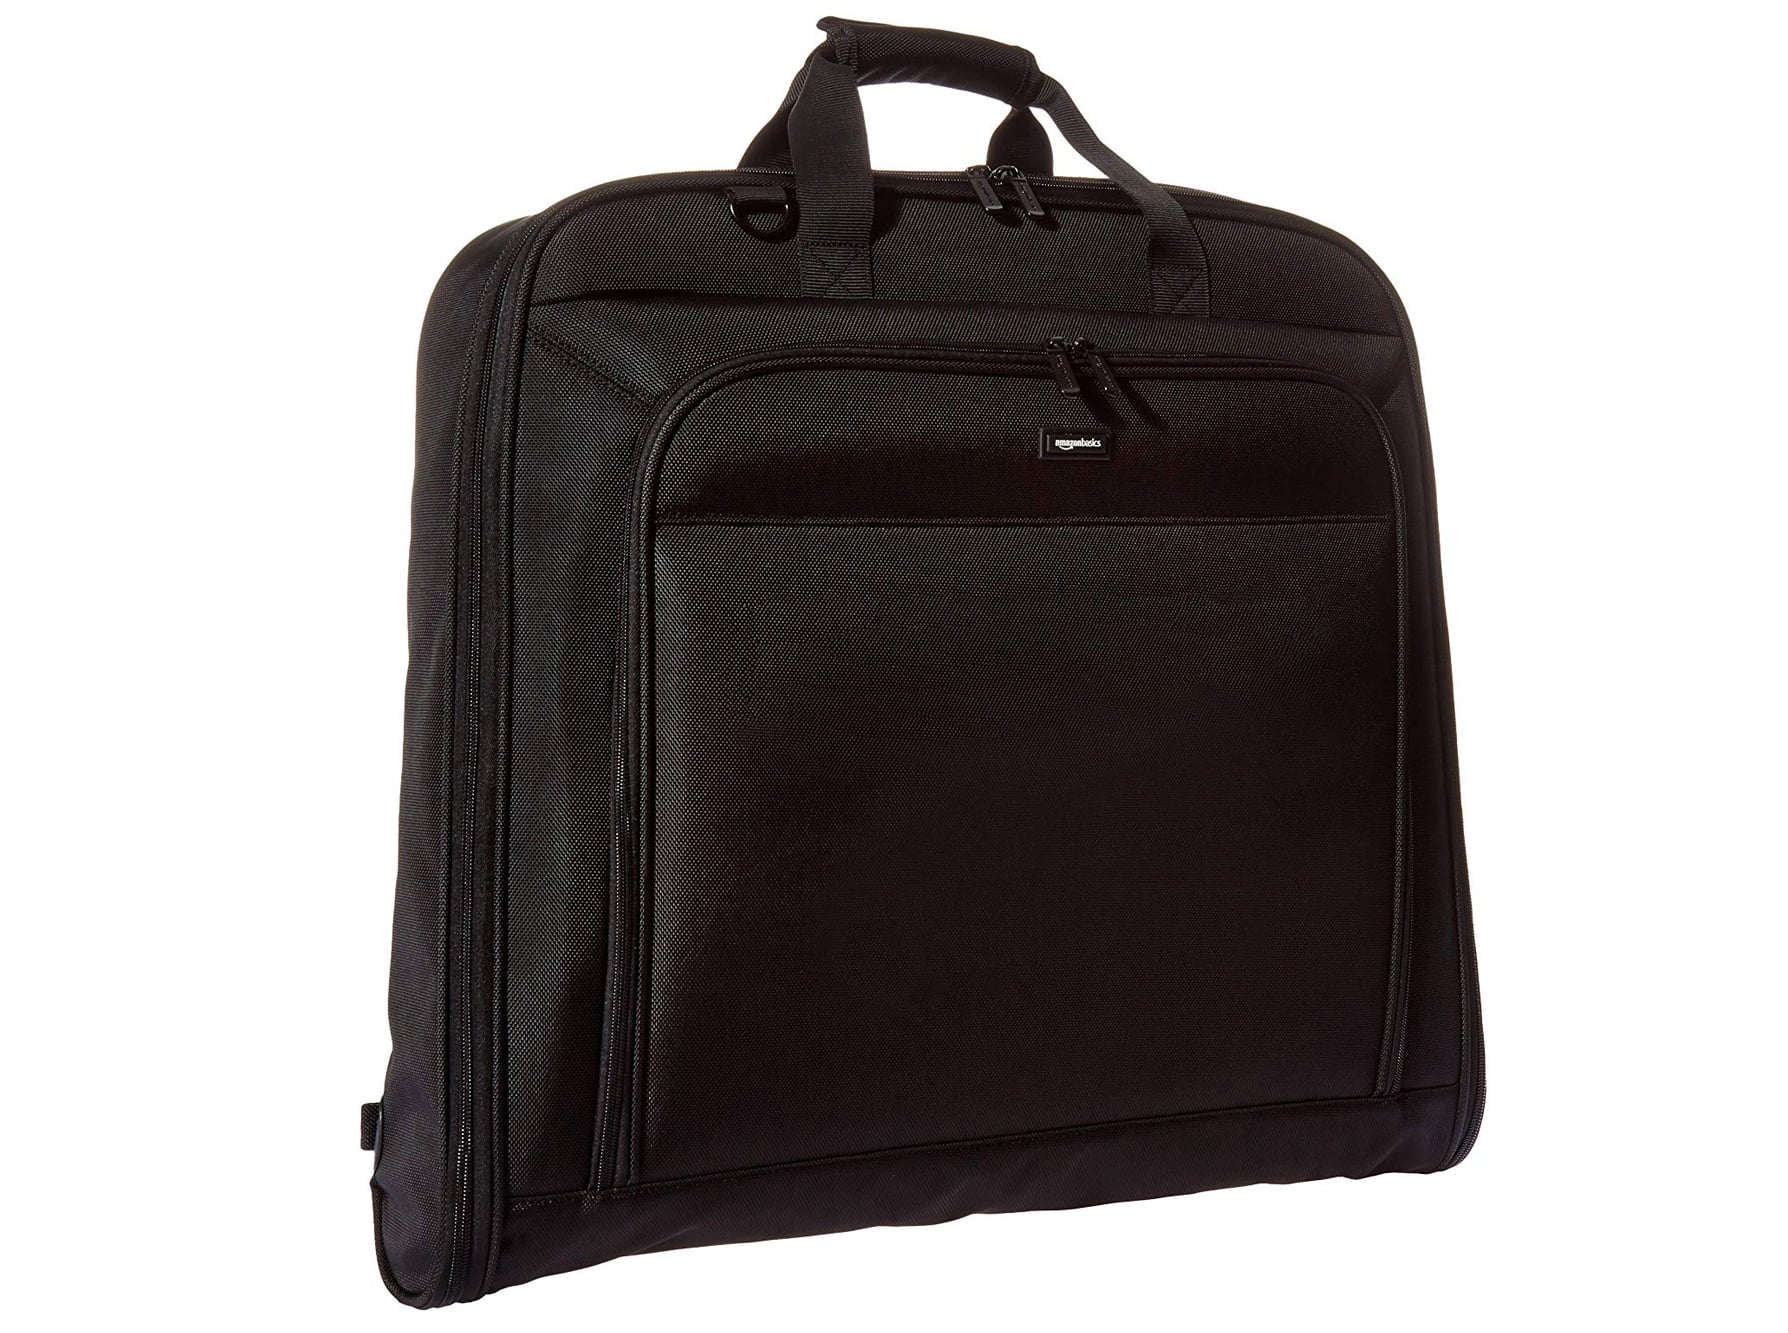 AmazonBasics Premium Garment Travel Bag